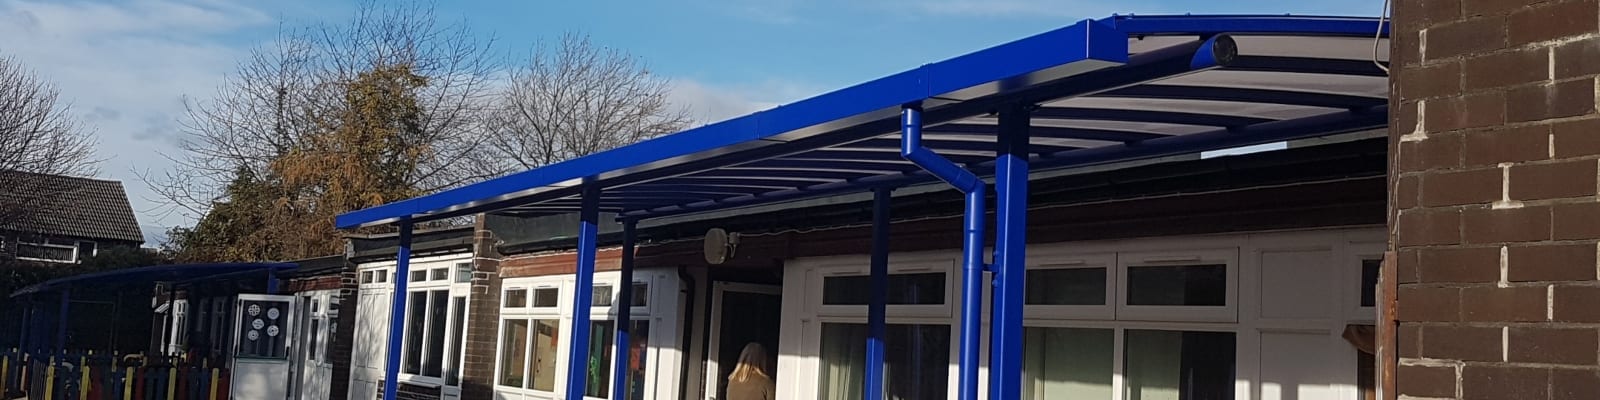 Broomfield School Blue Shelter